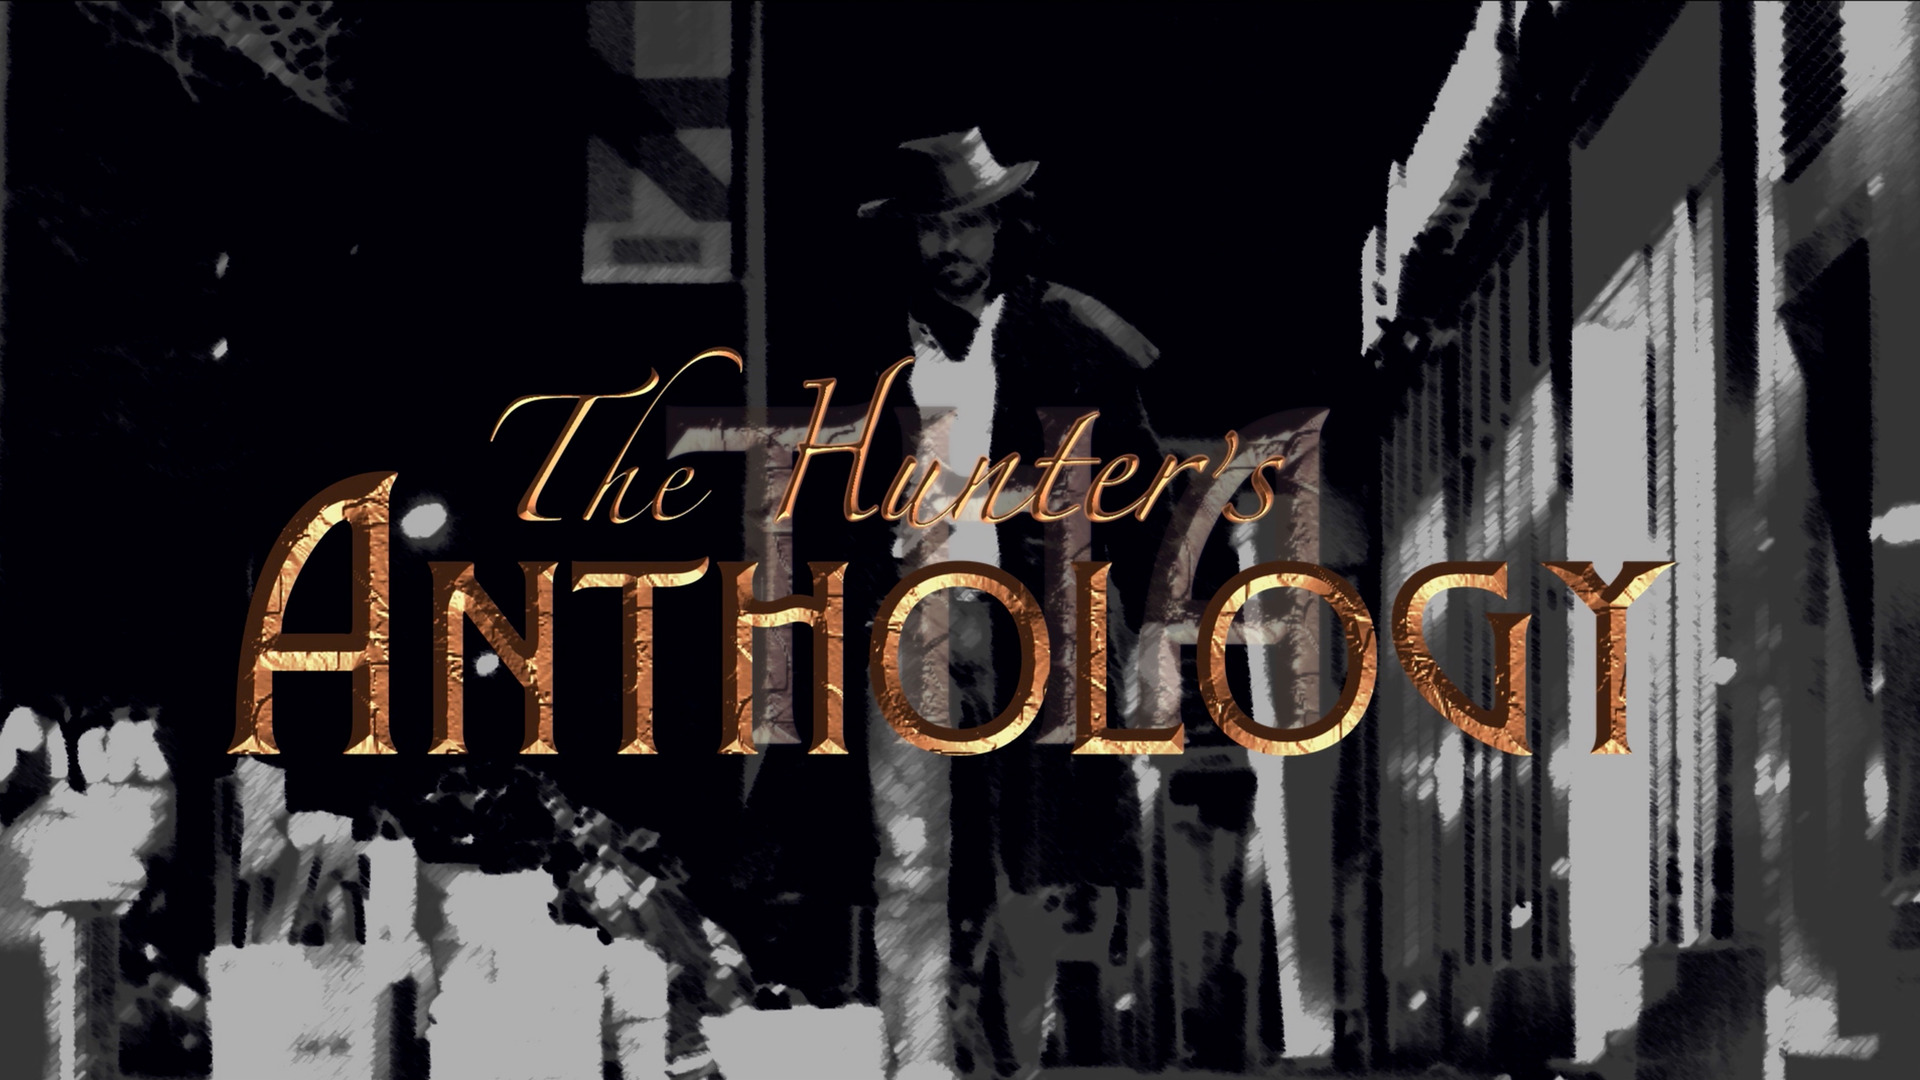 Show The Hunter's Anthology